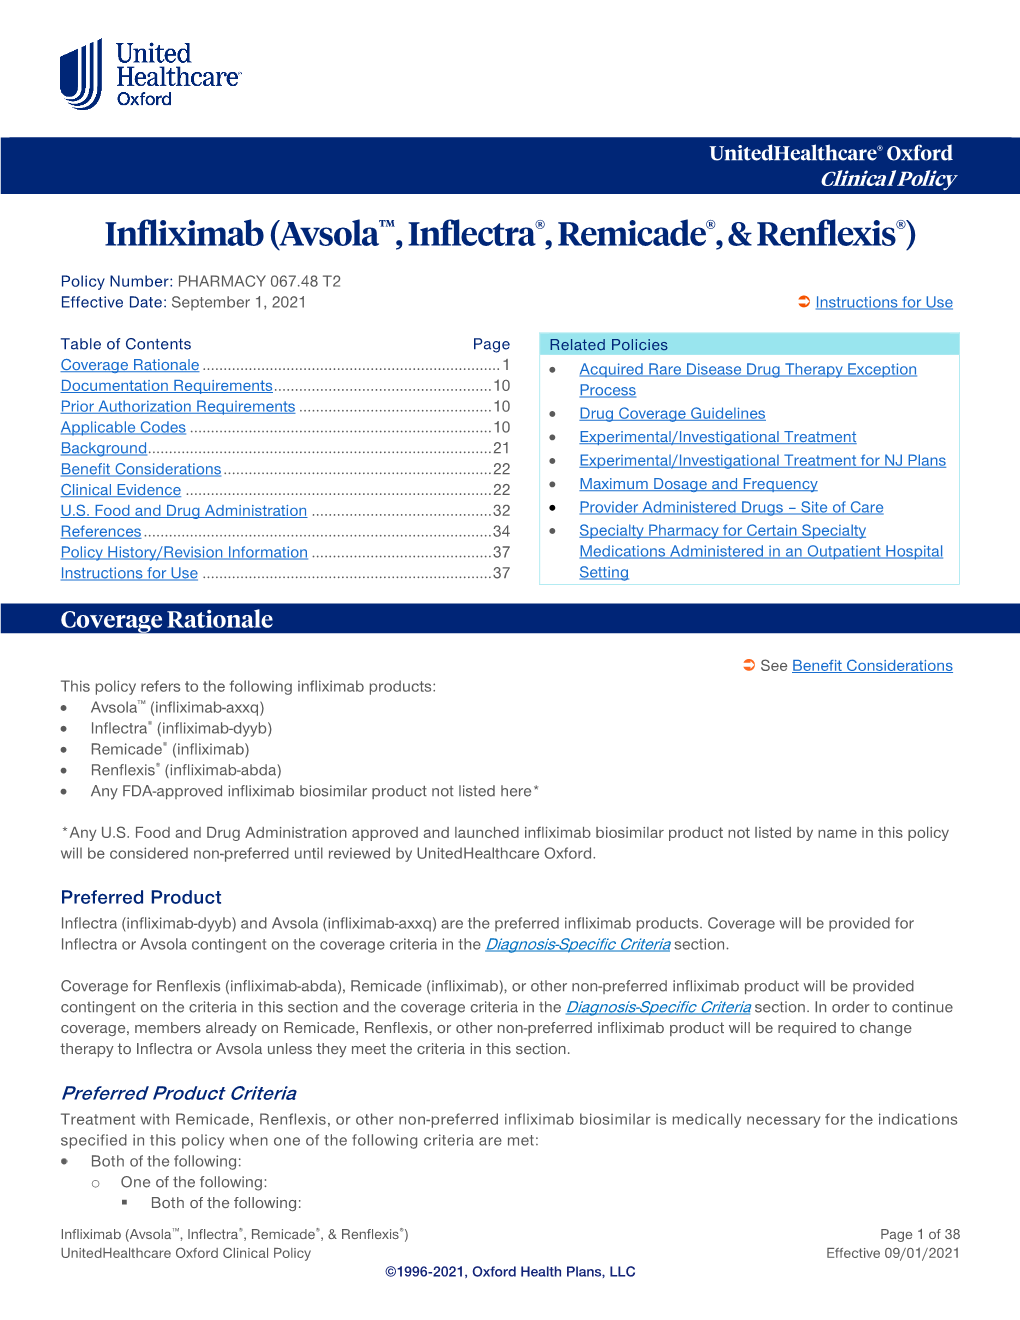 Infliximab (Avsola™, Inflectra®, Remicade®, & Renflexis®)